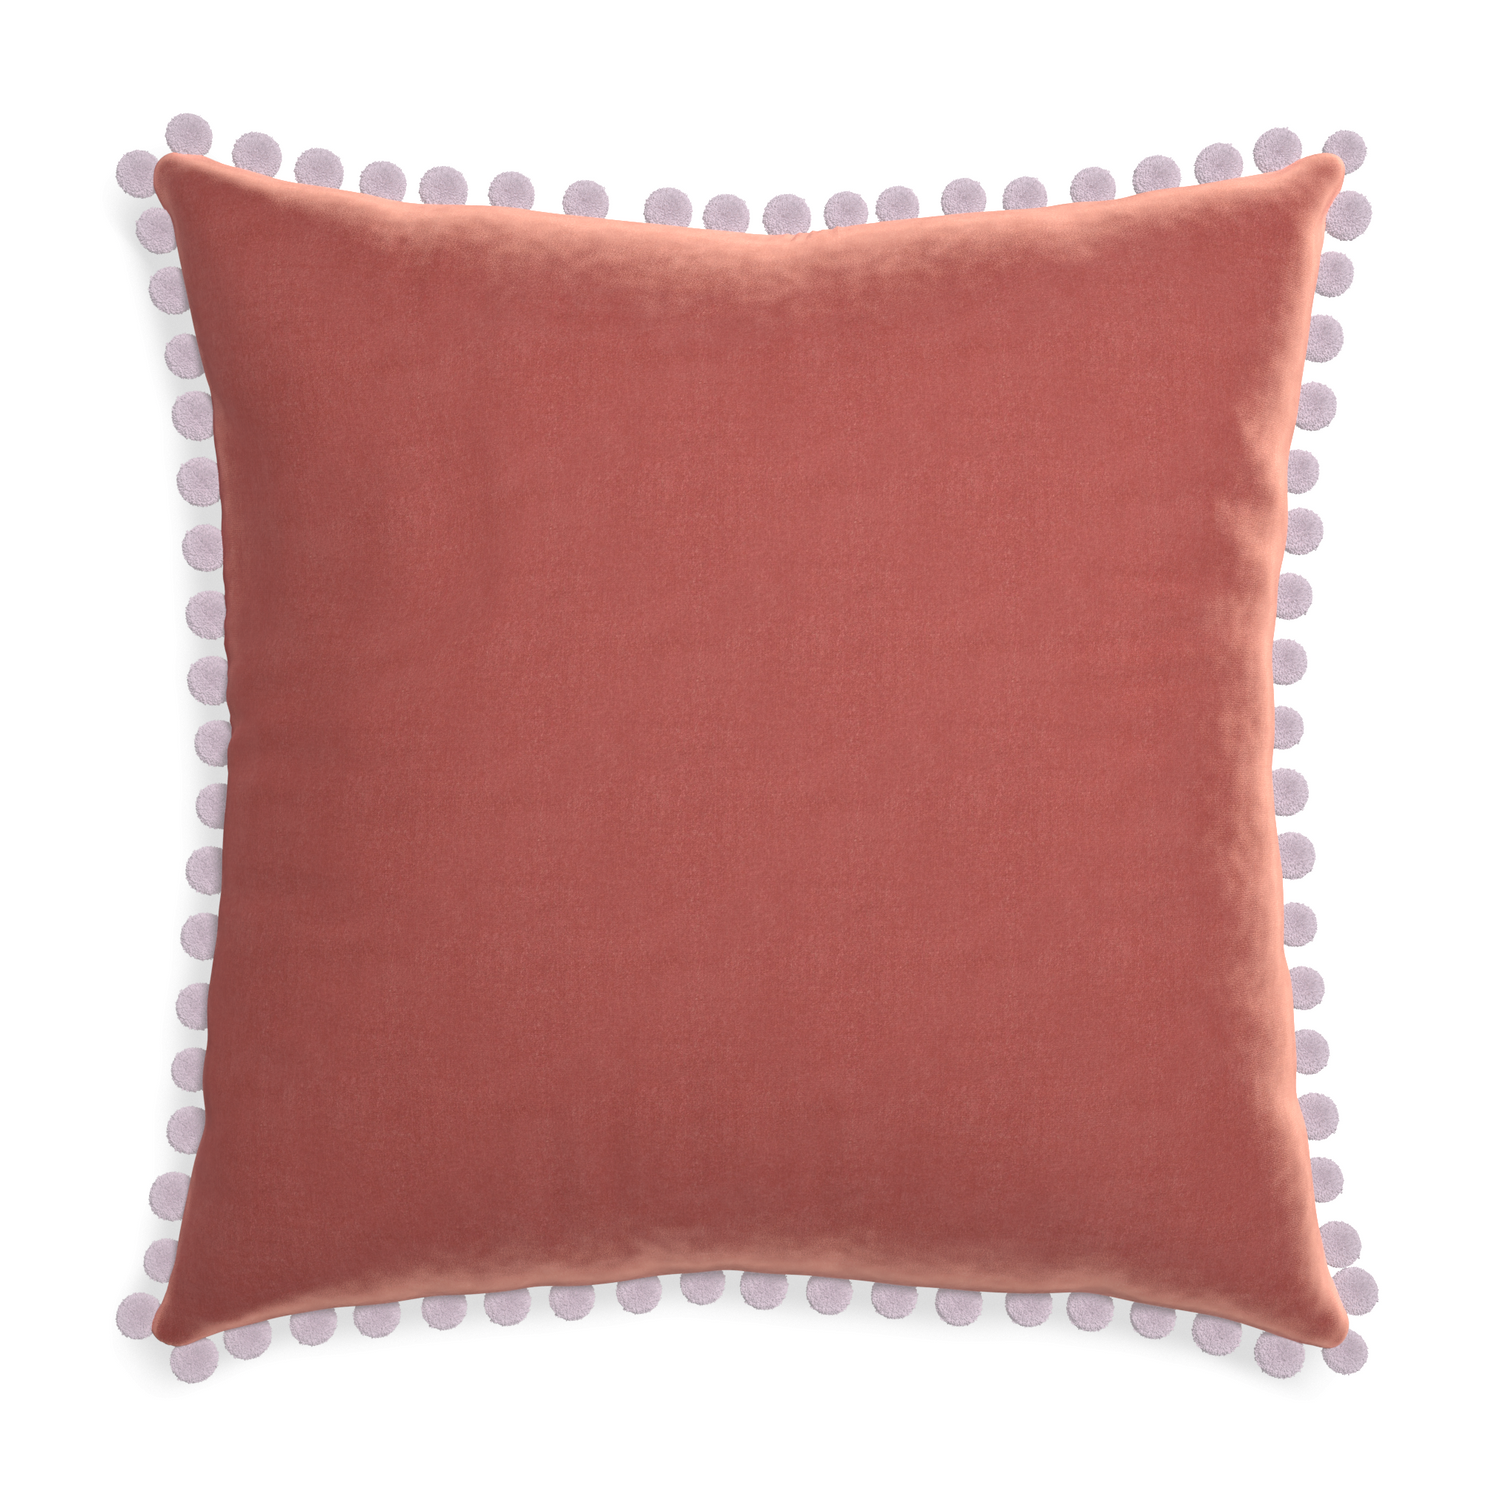 square coral velvet pillow with lilac pom poms